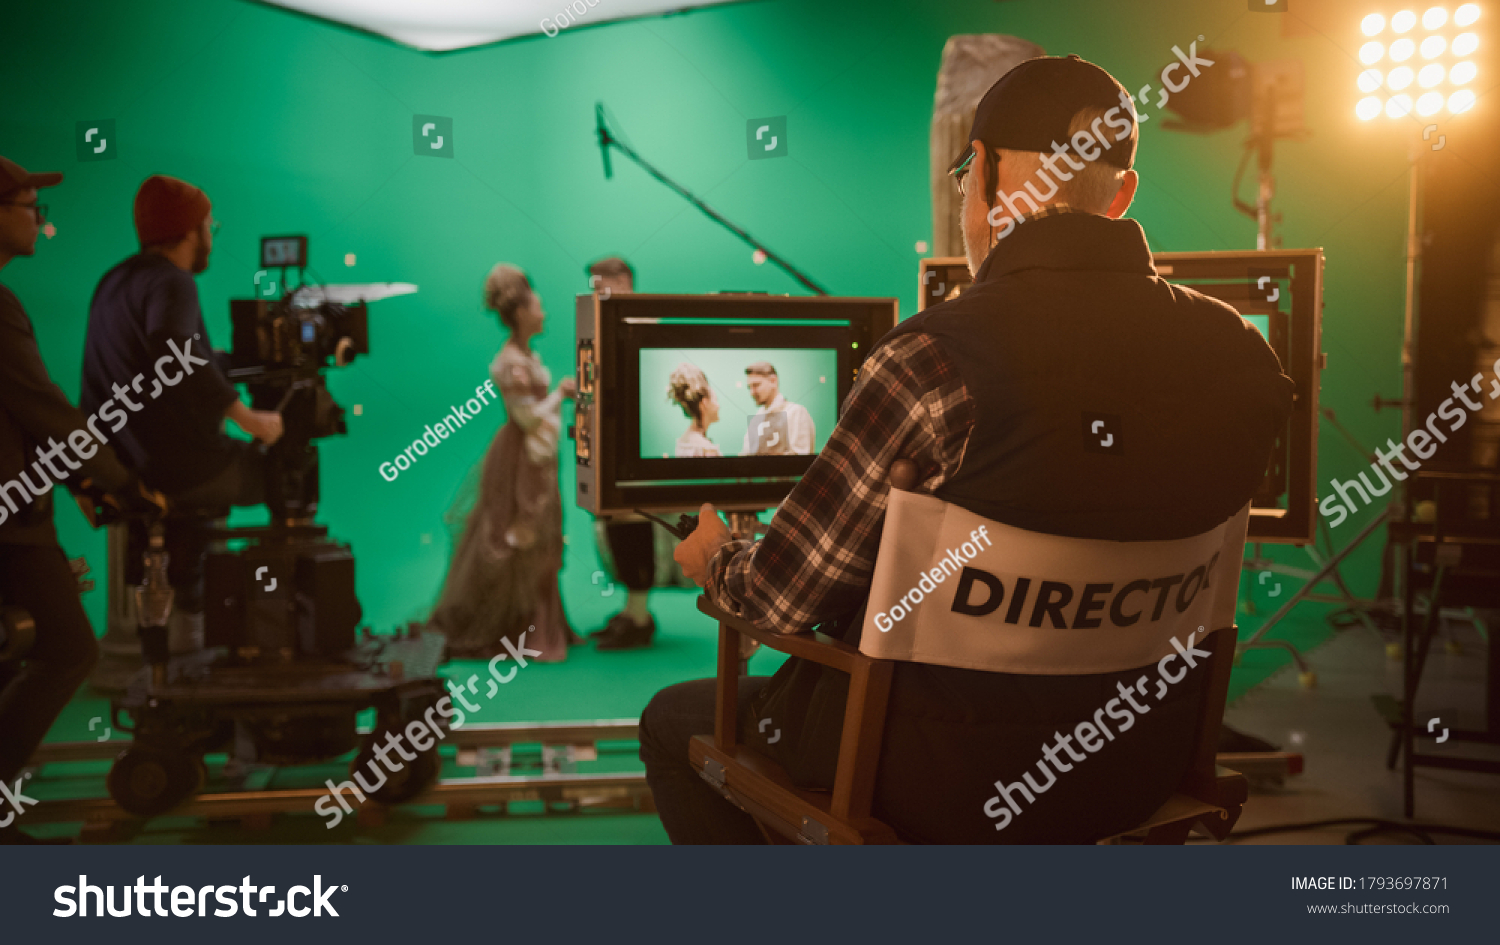 Director Shooting Period Film Green Screen CGI Scene with Actors Wearing Renaissance Costumes. Big Film Studio Professional Crew Shooting Big Budget Movie. Back View Shot #1793697871